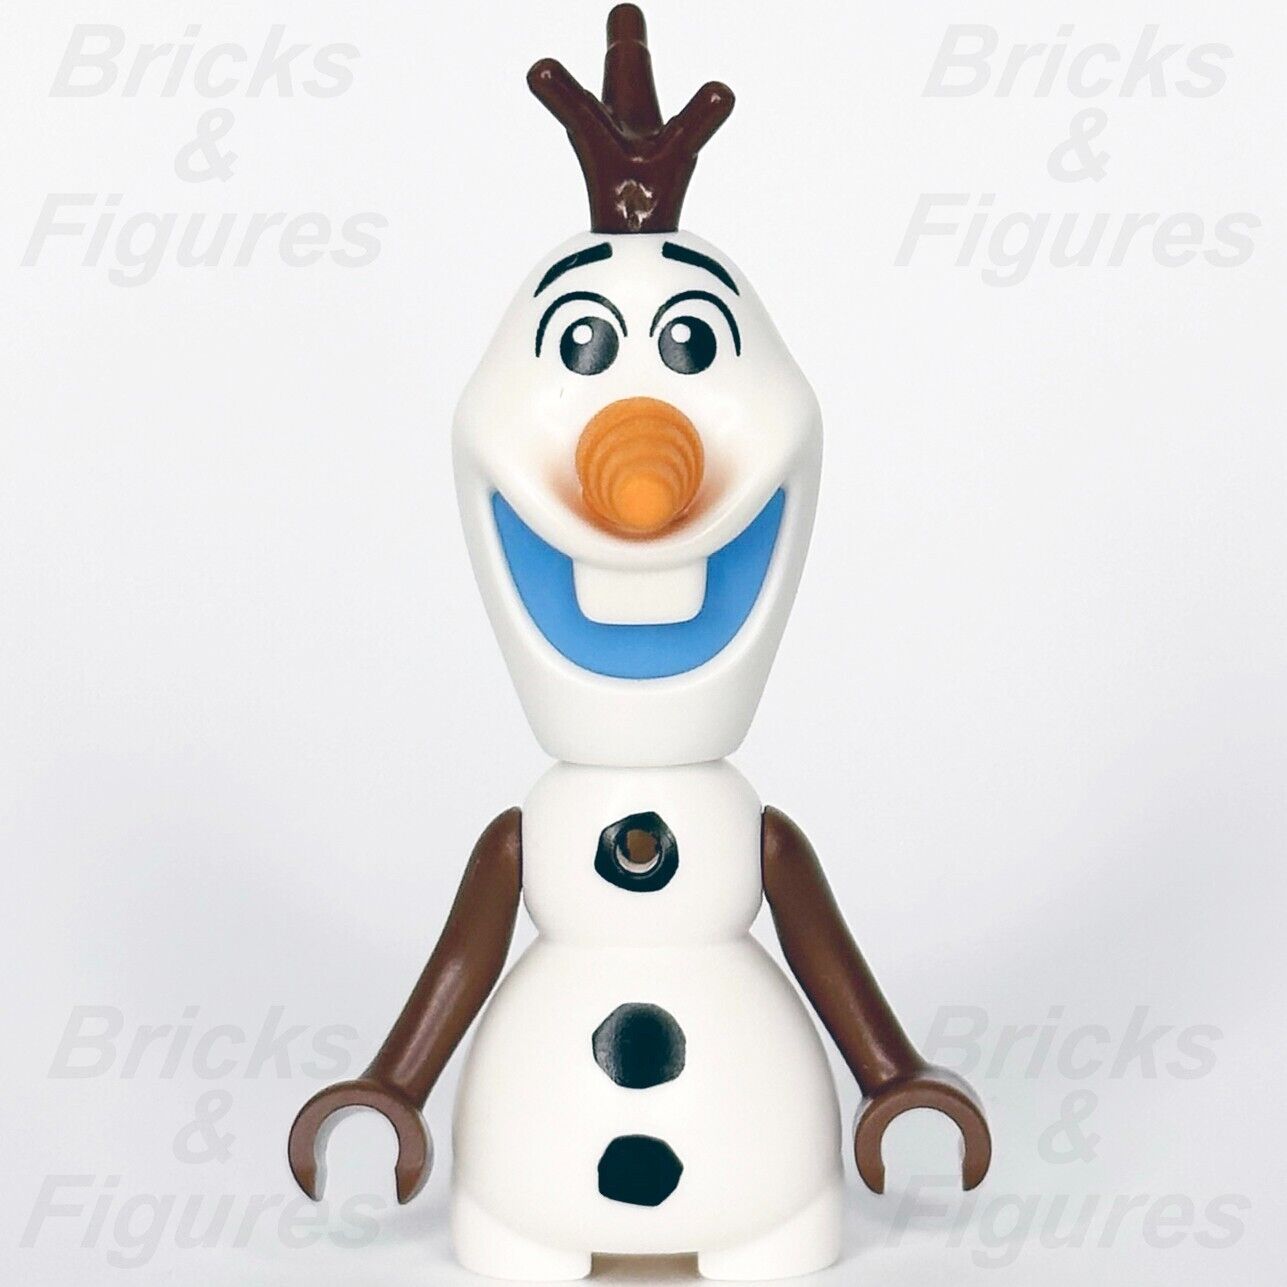 LEGO Frozen Olaf Disney Princess Minifigure 43197 dp138 Snowman Minifig New - Bricks & Figures